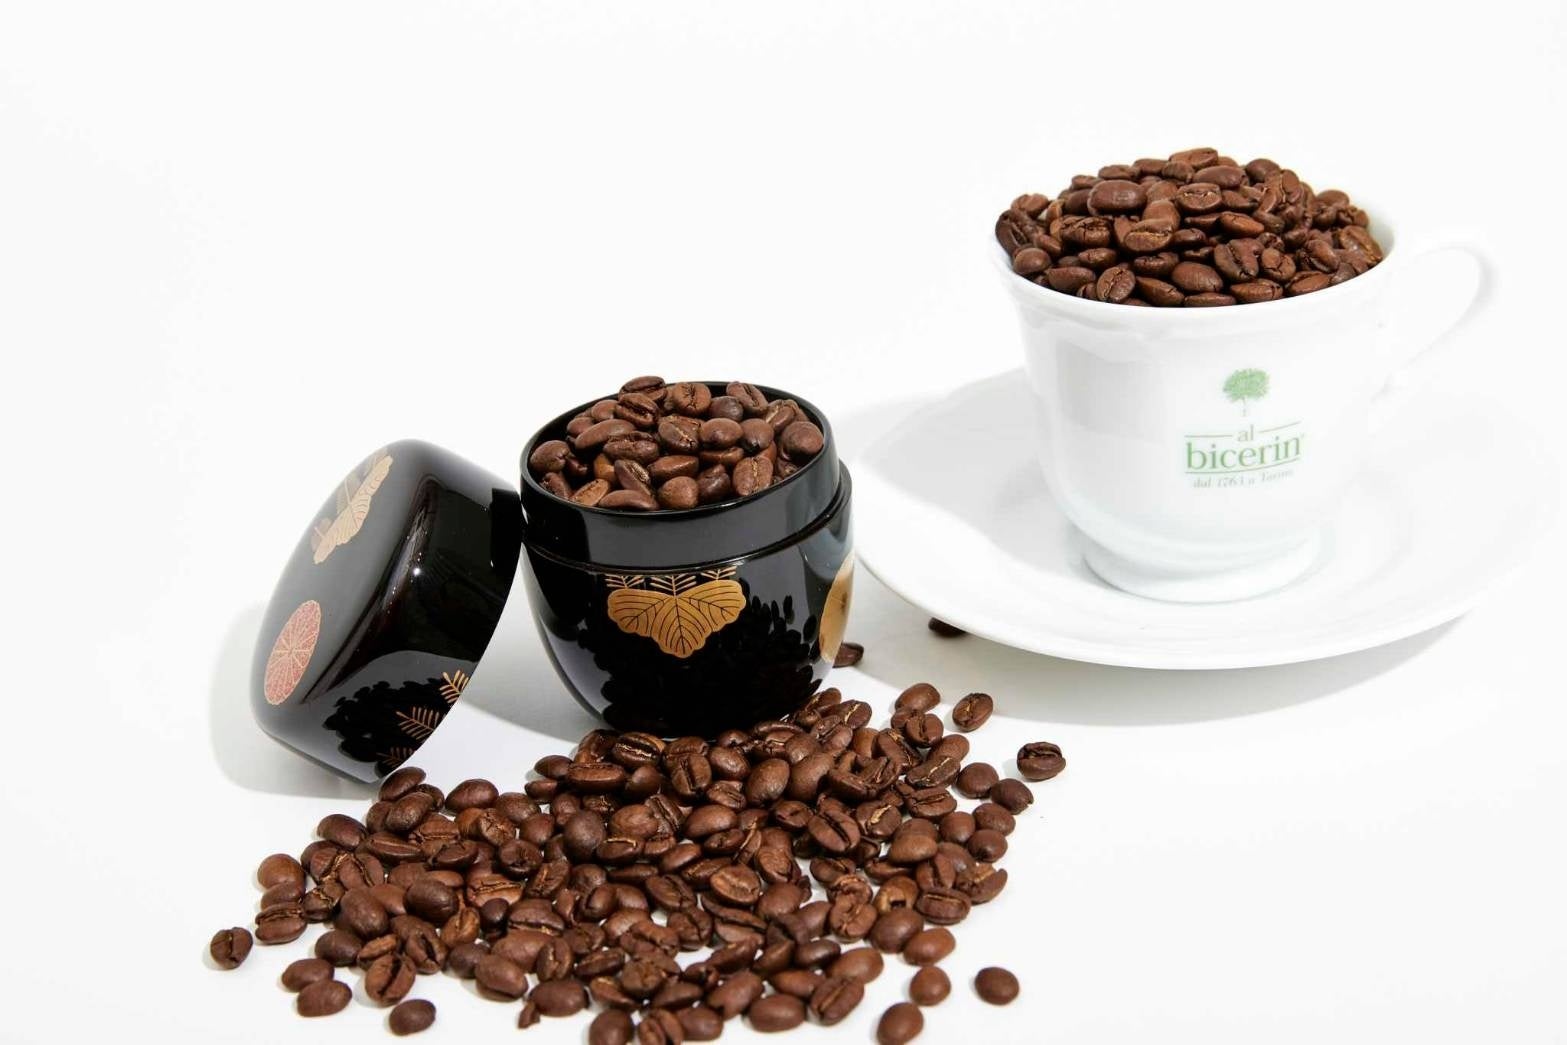 【Bicerin News】岸田文雄首相とバイデン大統領の会談において、Bicerin OKINAWA COFFEE×輪島塗「涛華堂」の棗が訪米時の手土産に採用されました